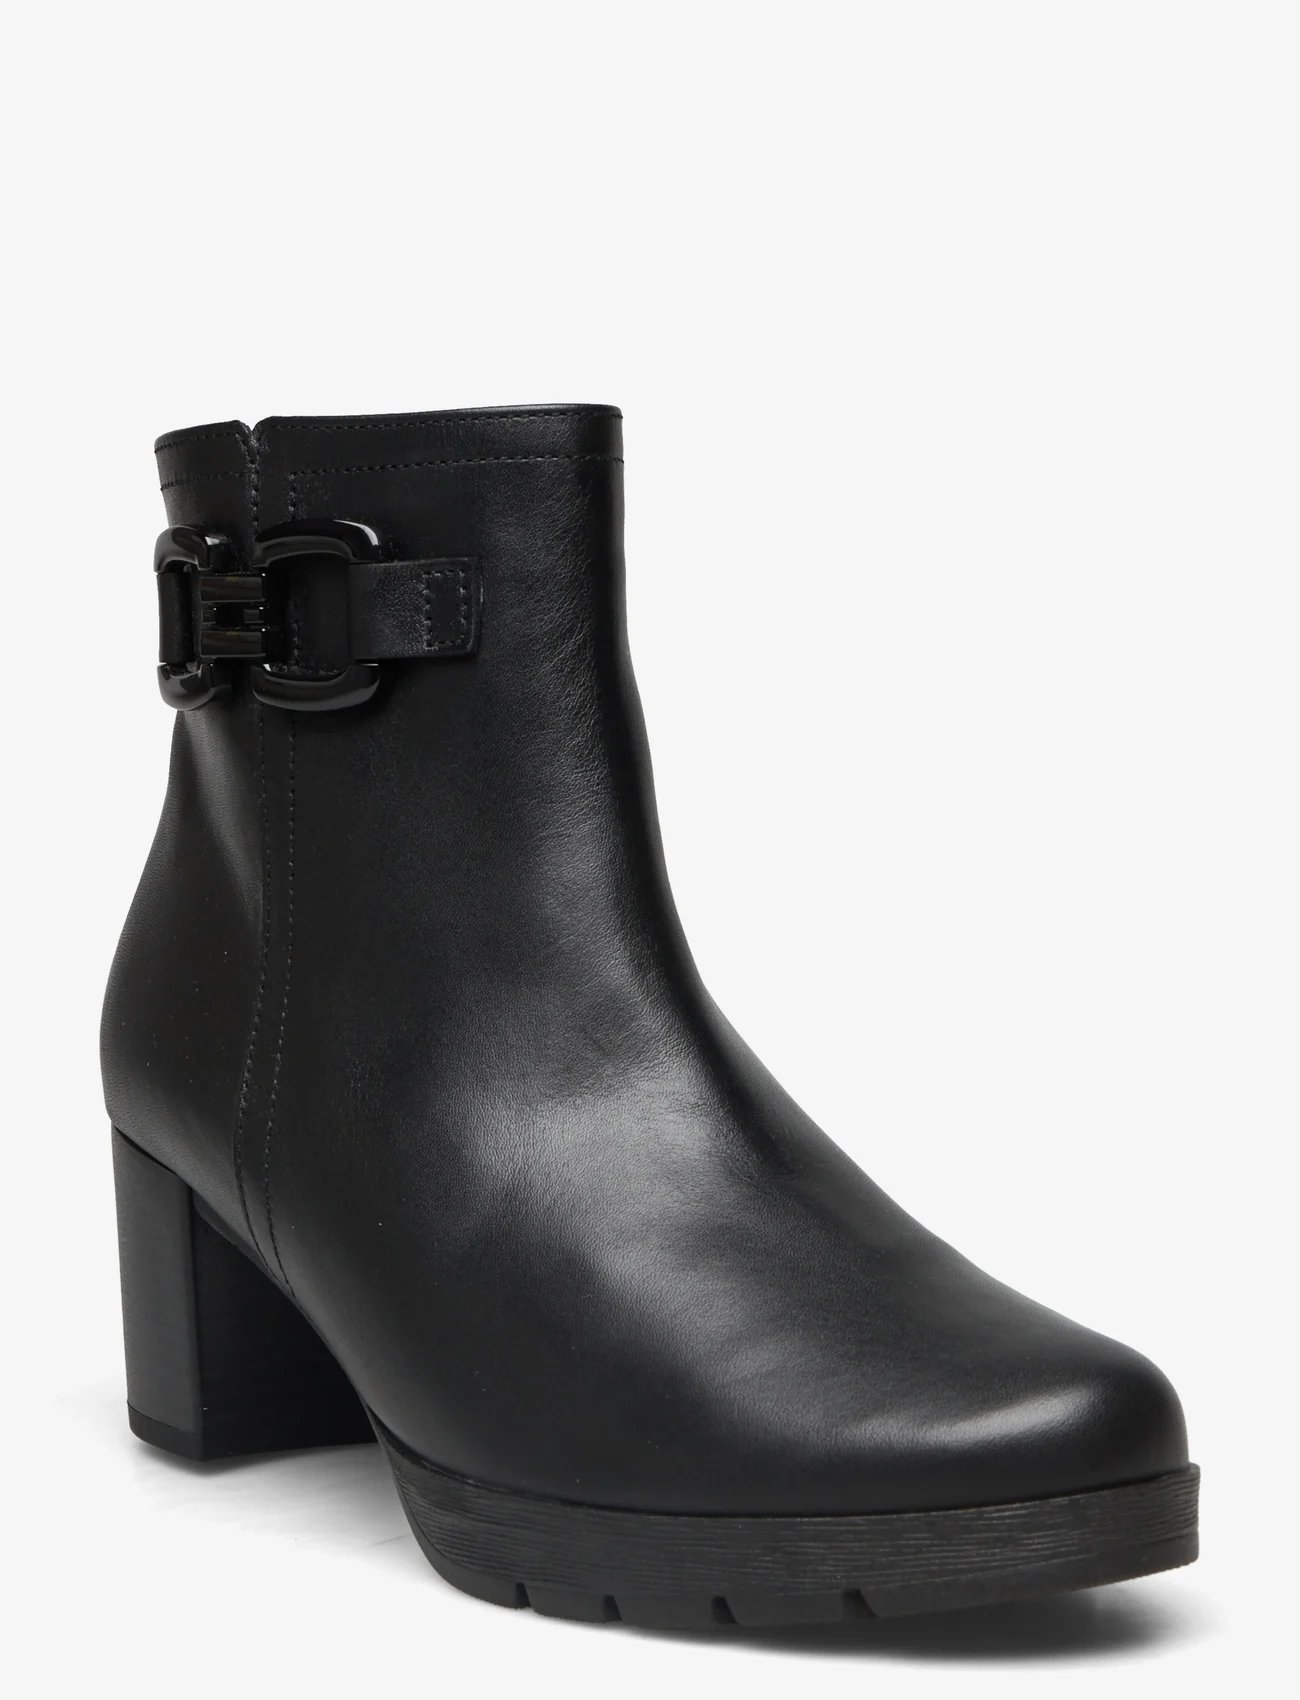 Gabor - Ankle boot - high heel - black - 0